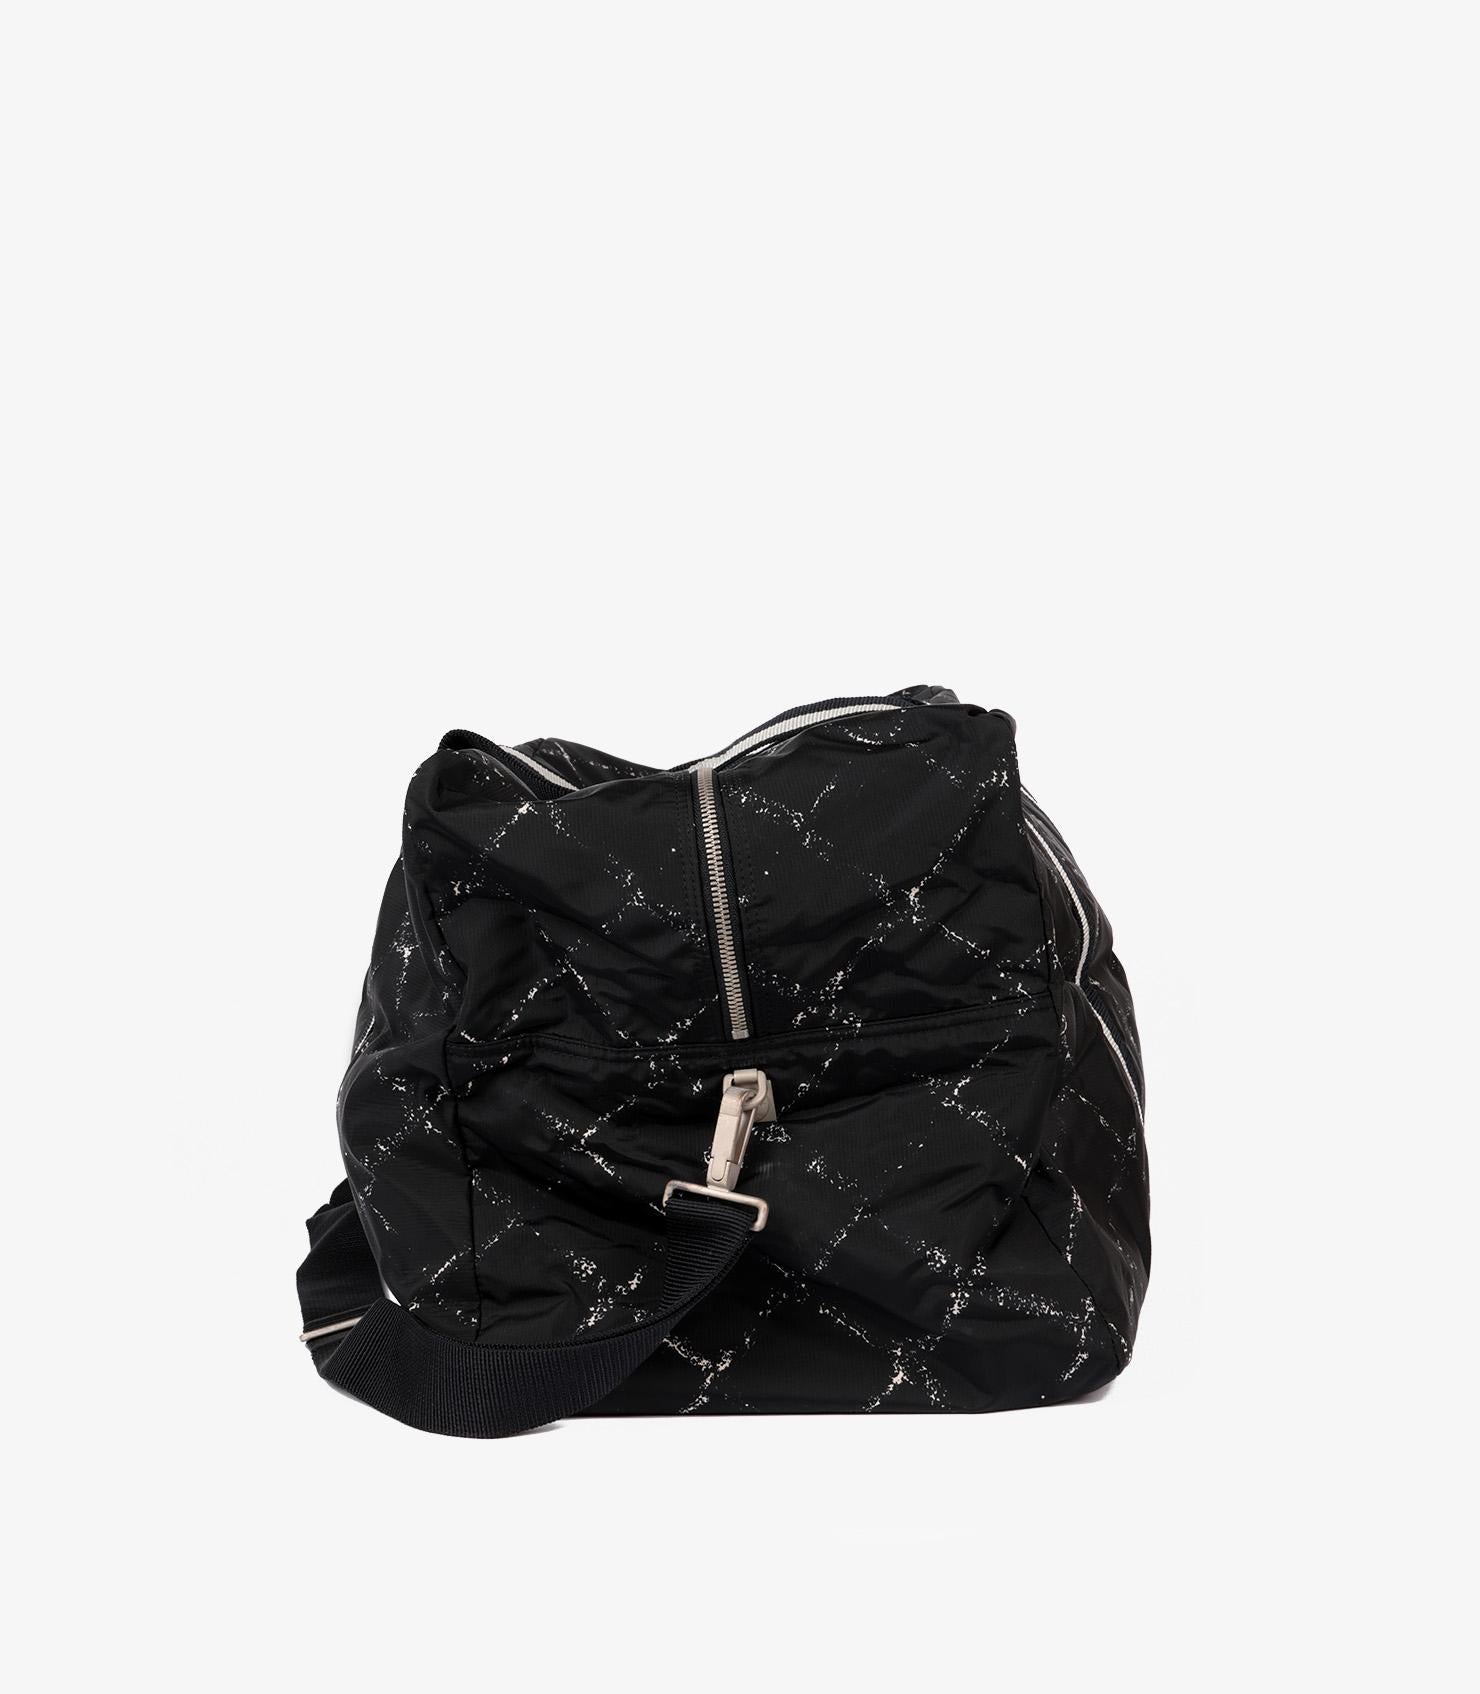 Chanel Black & White Nylon Travel Line Duffle Bag 3